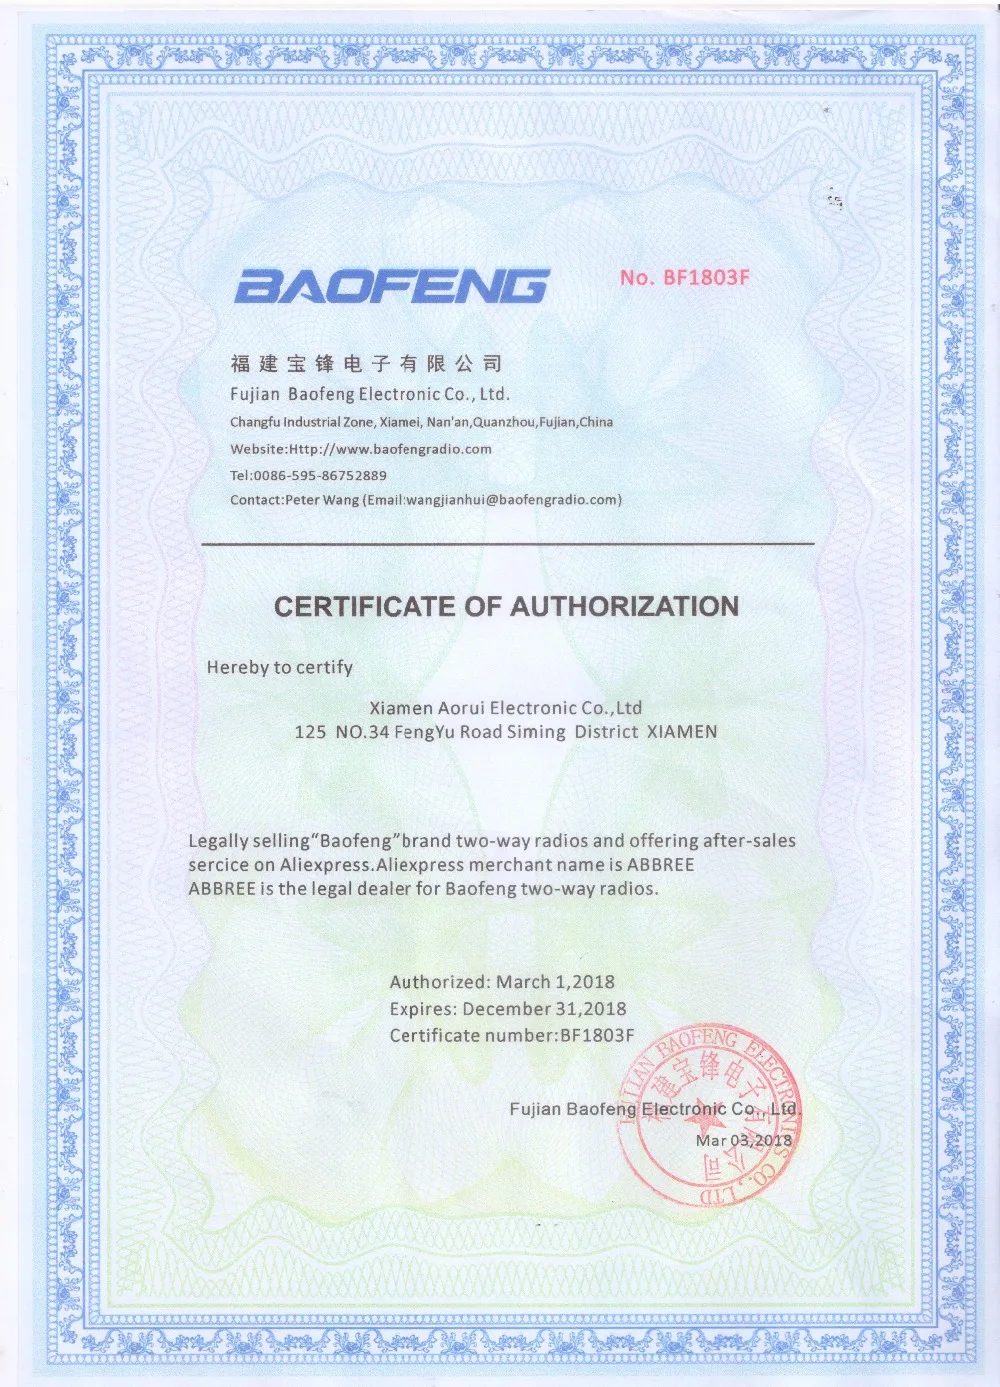 Baofeng UV-82 плюс 8 Вт Tri-мощность 8 W/4 W/1 W Мощный 3800 mAh батарея Портативный радио dual band 10 км ручной UV82 Wlkie Talkie